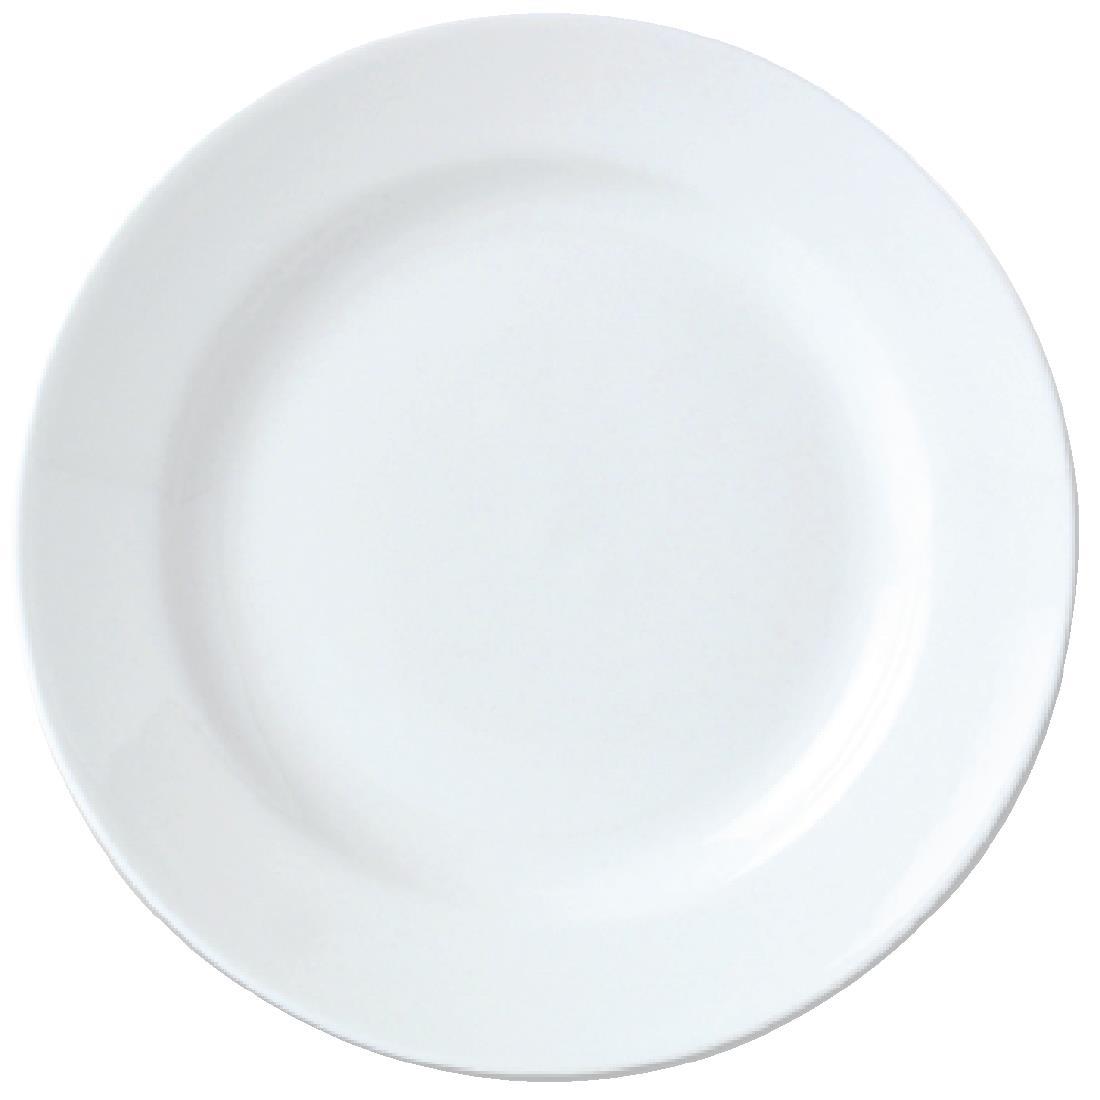 Steelite Simplicity White Harmony Plates 300mm (Pack of 12) - V9249  - 1